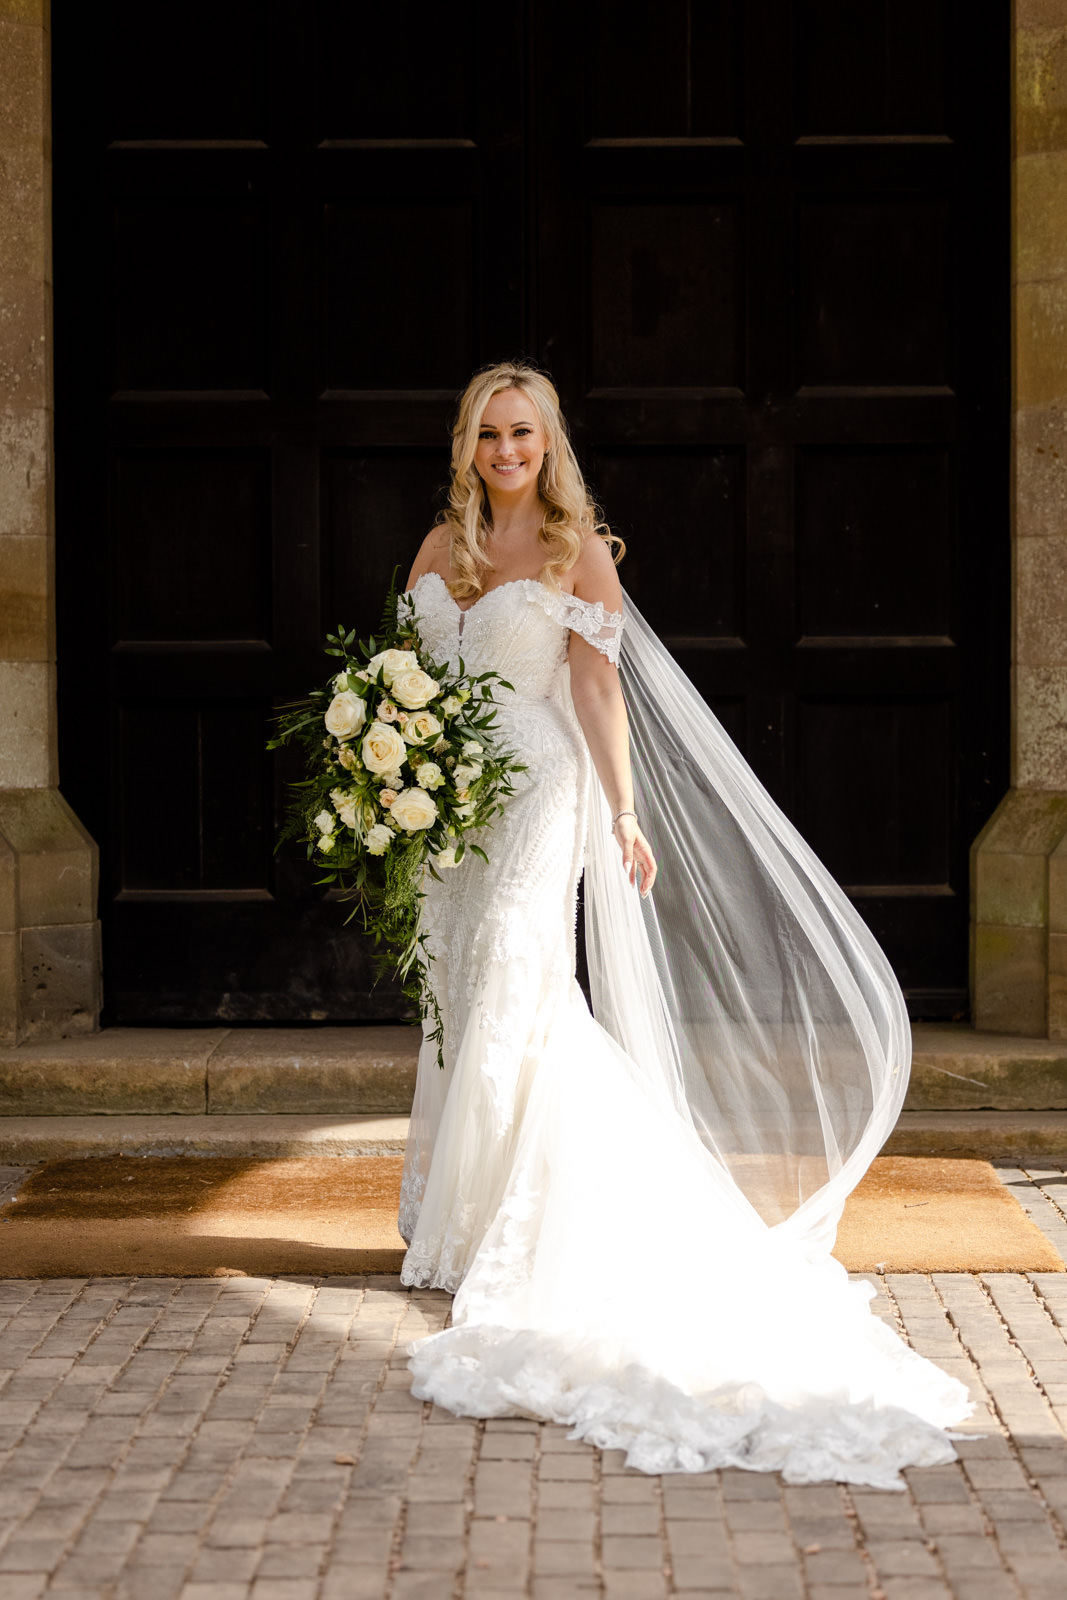 Eastnor Castle Wedding Photographer - Bride